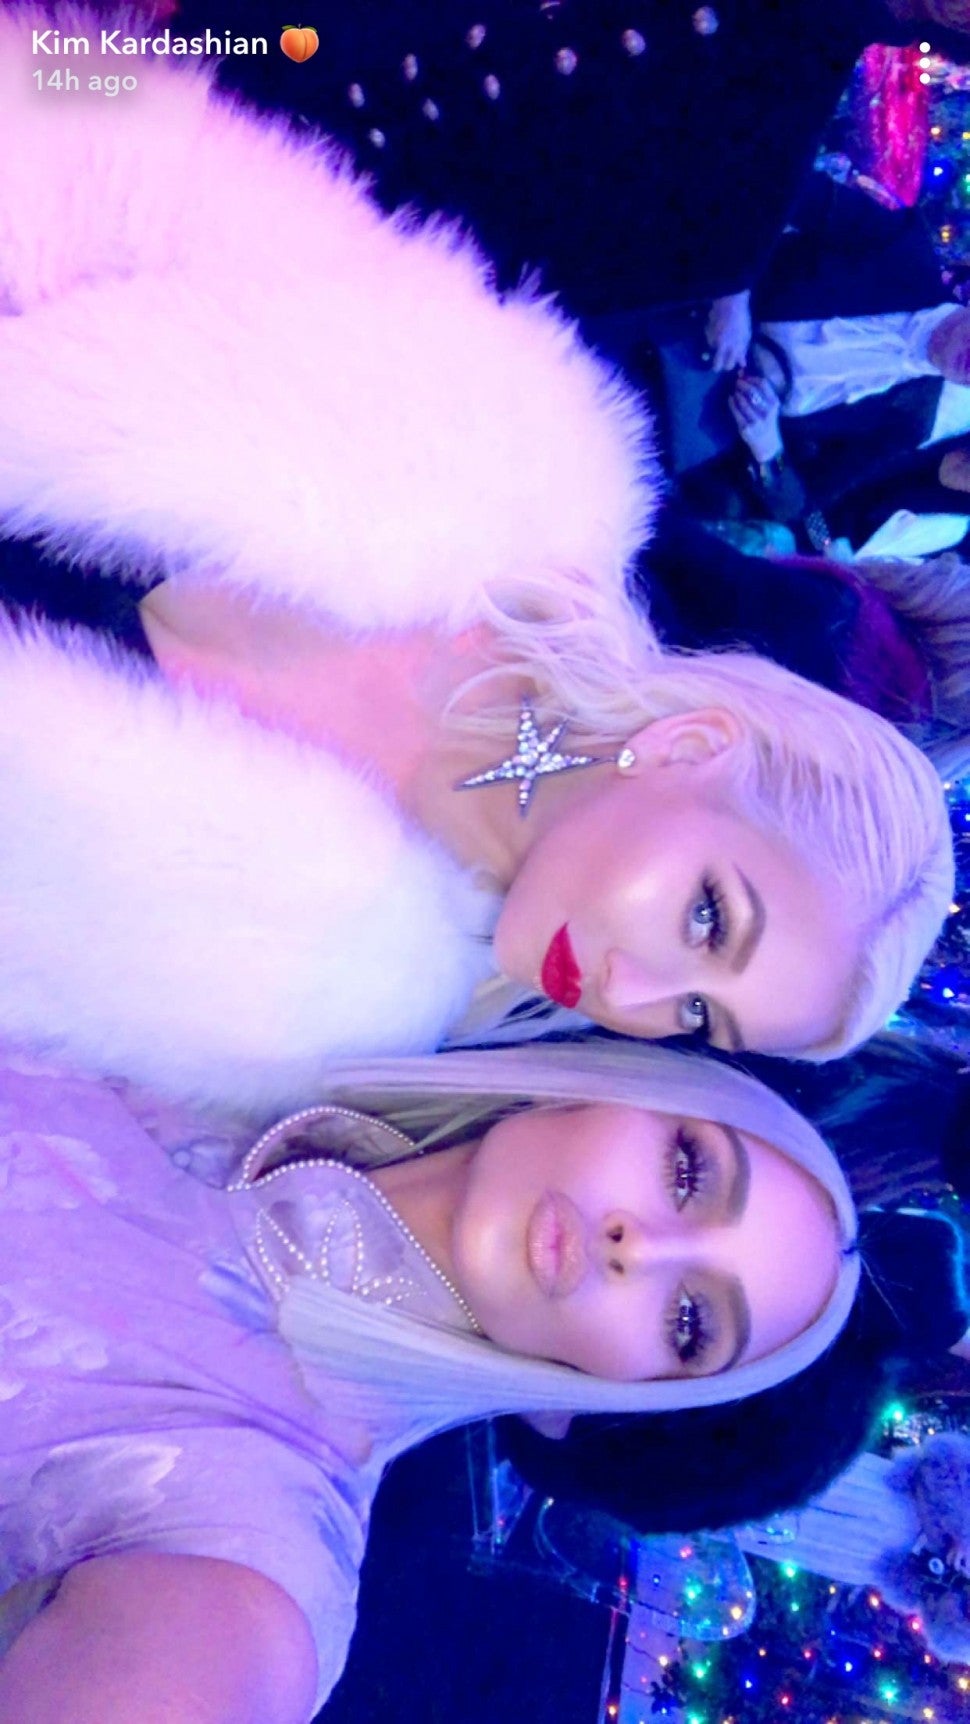 Christina Aguilera and Kim Kardashian on xmas eve